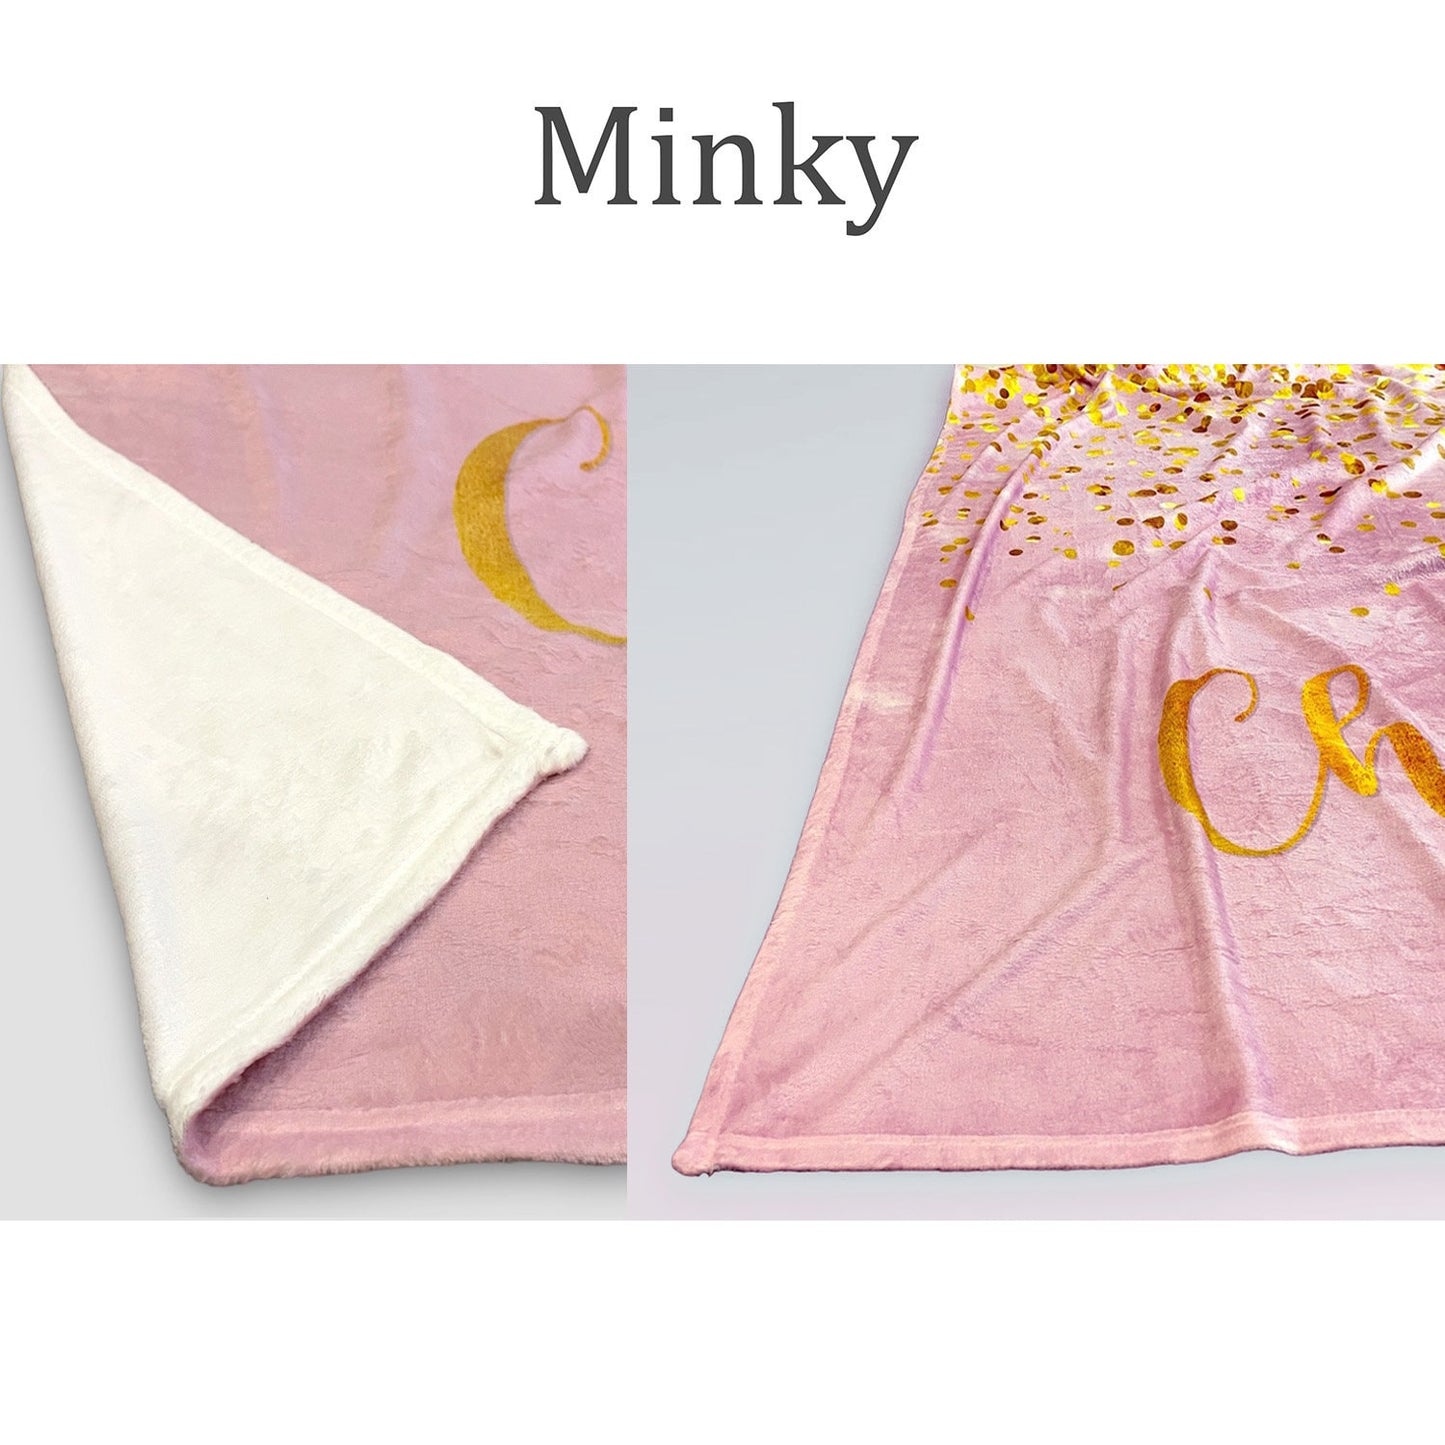 Retro Groovy Autumn personalize blanket, Pumpkin blanket Minky or Sherpa custom blanket, Baby blanket, birthday gift idea